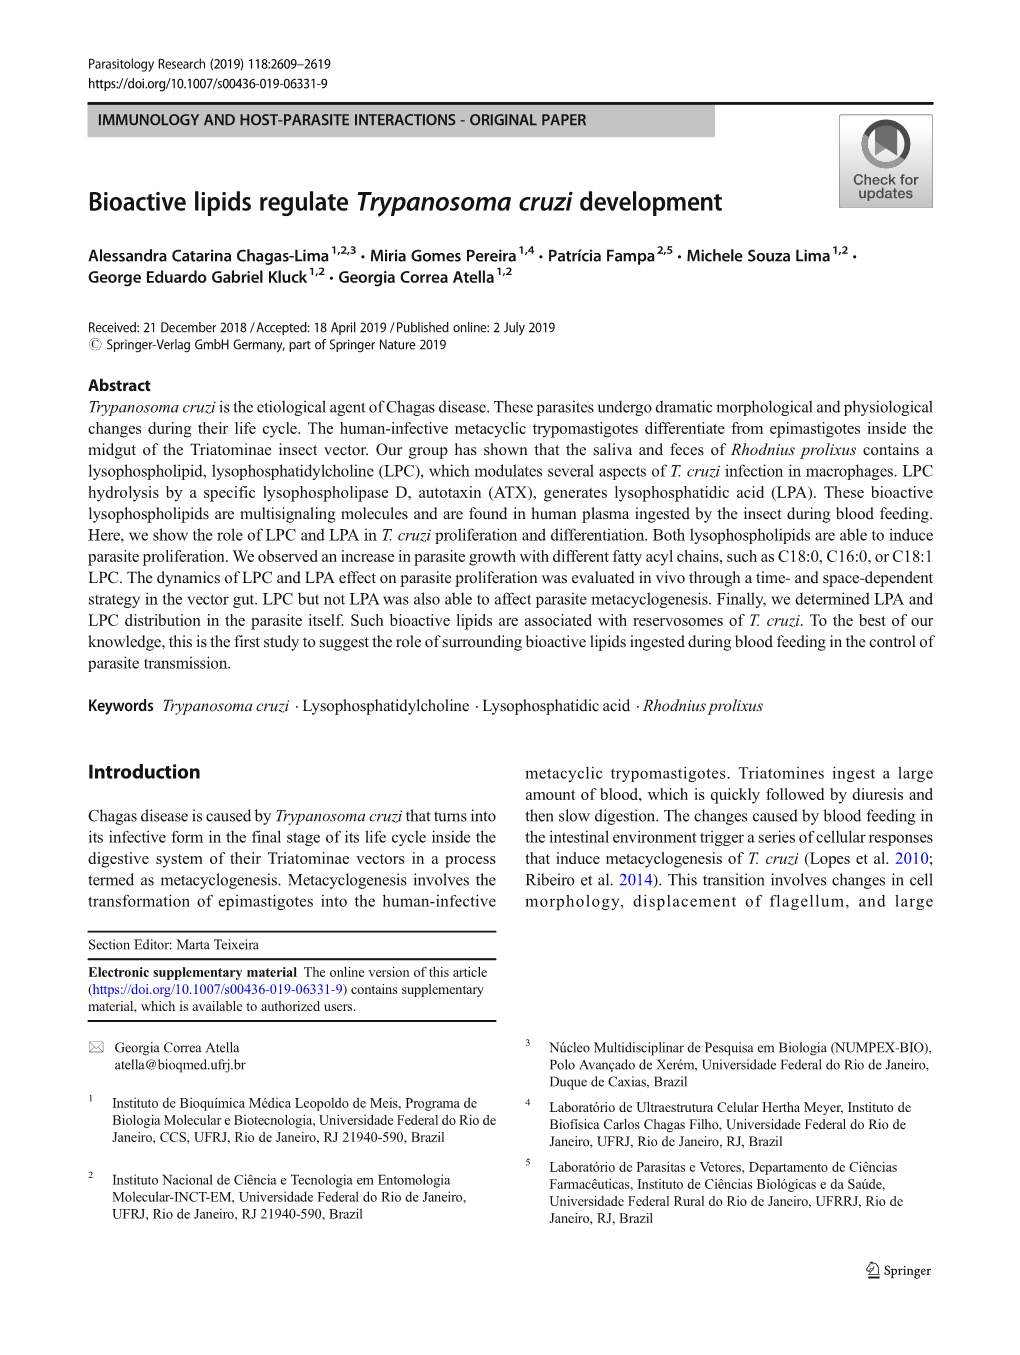 Bioactive Lipids Regulate Trypanosoma Cruzi Development